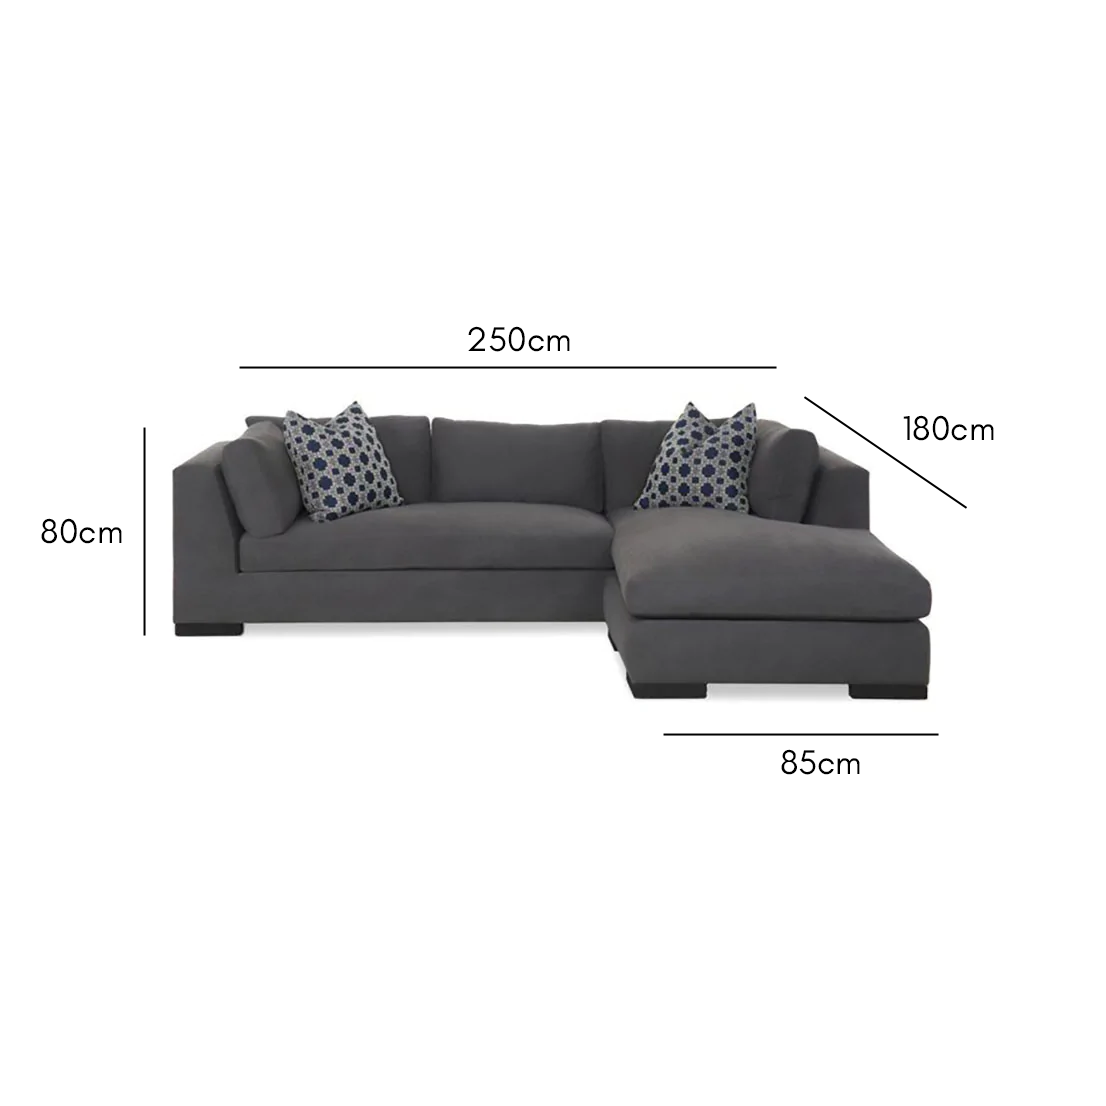 Beech wood corner sofa 250×180 cm - multiple colors - DECO214